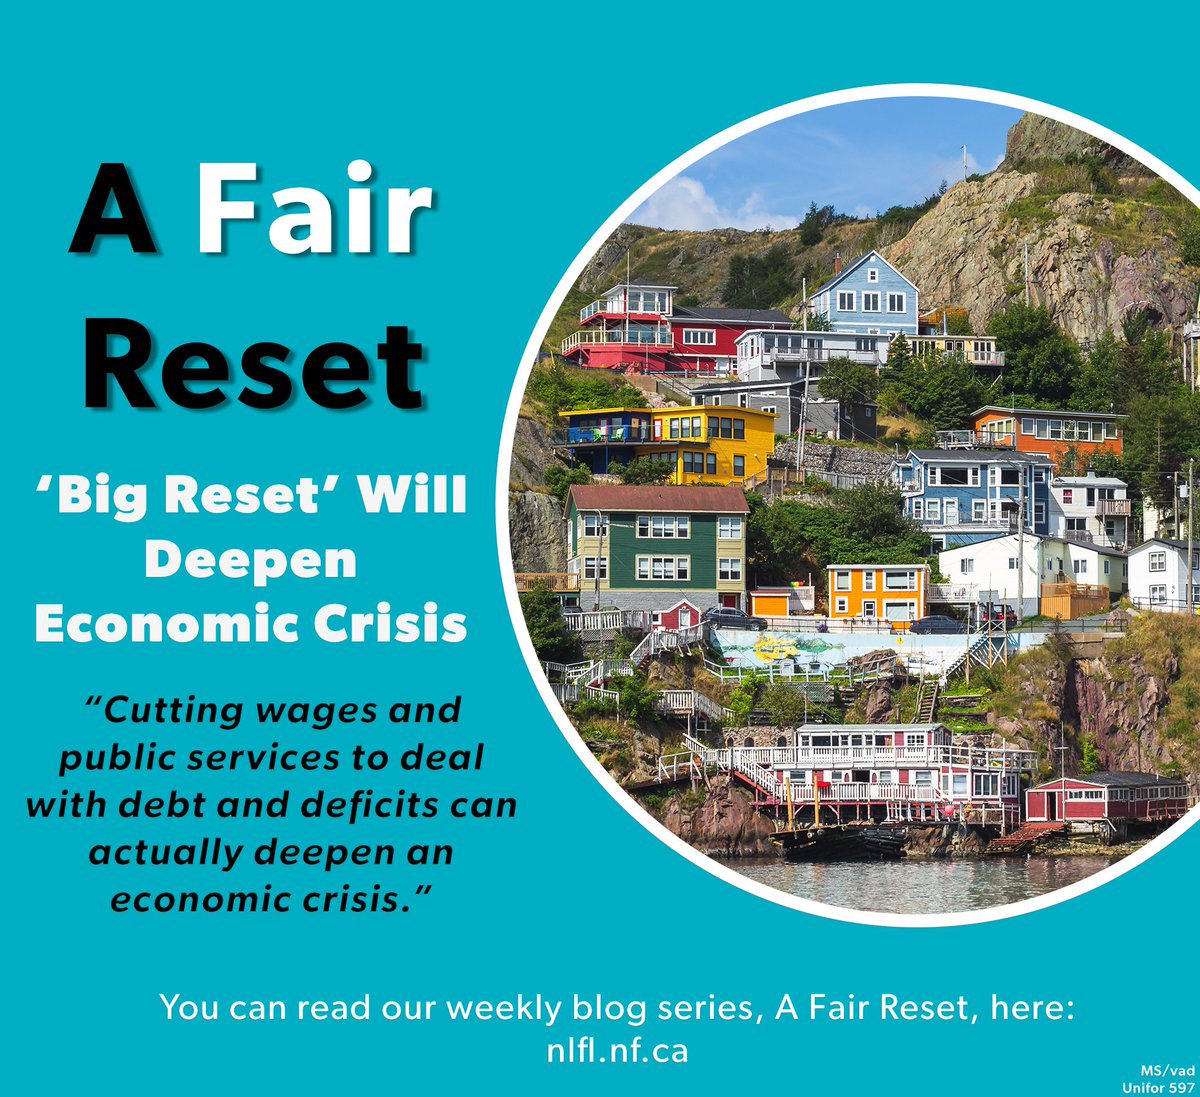 A Fair Reset with an image of a coastal Newfoundland town.